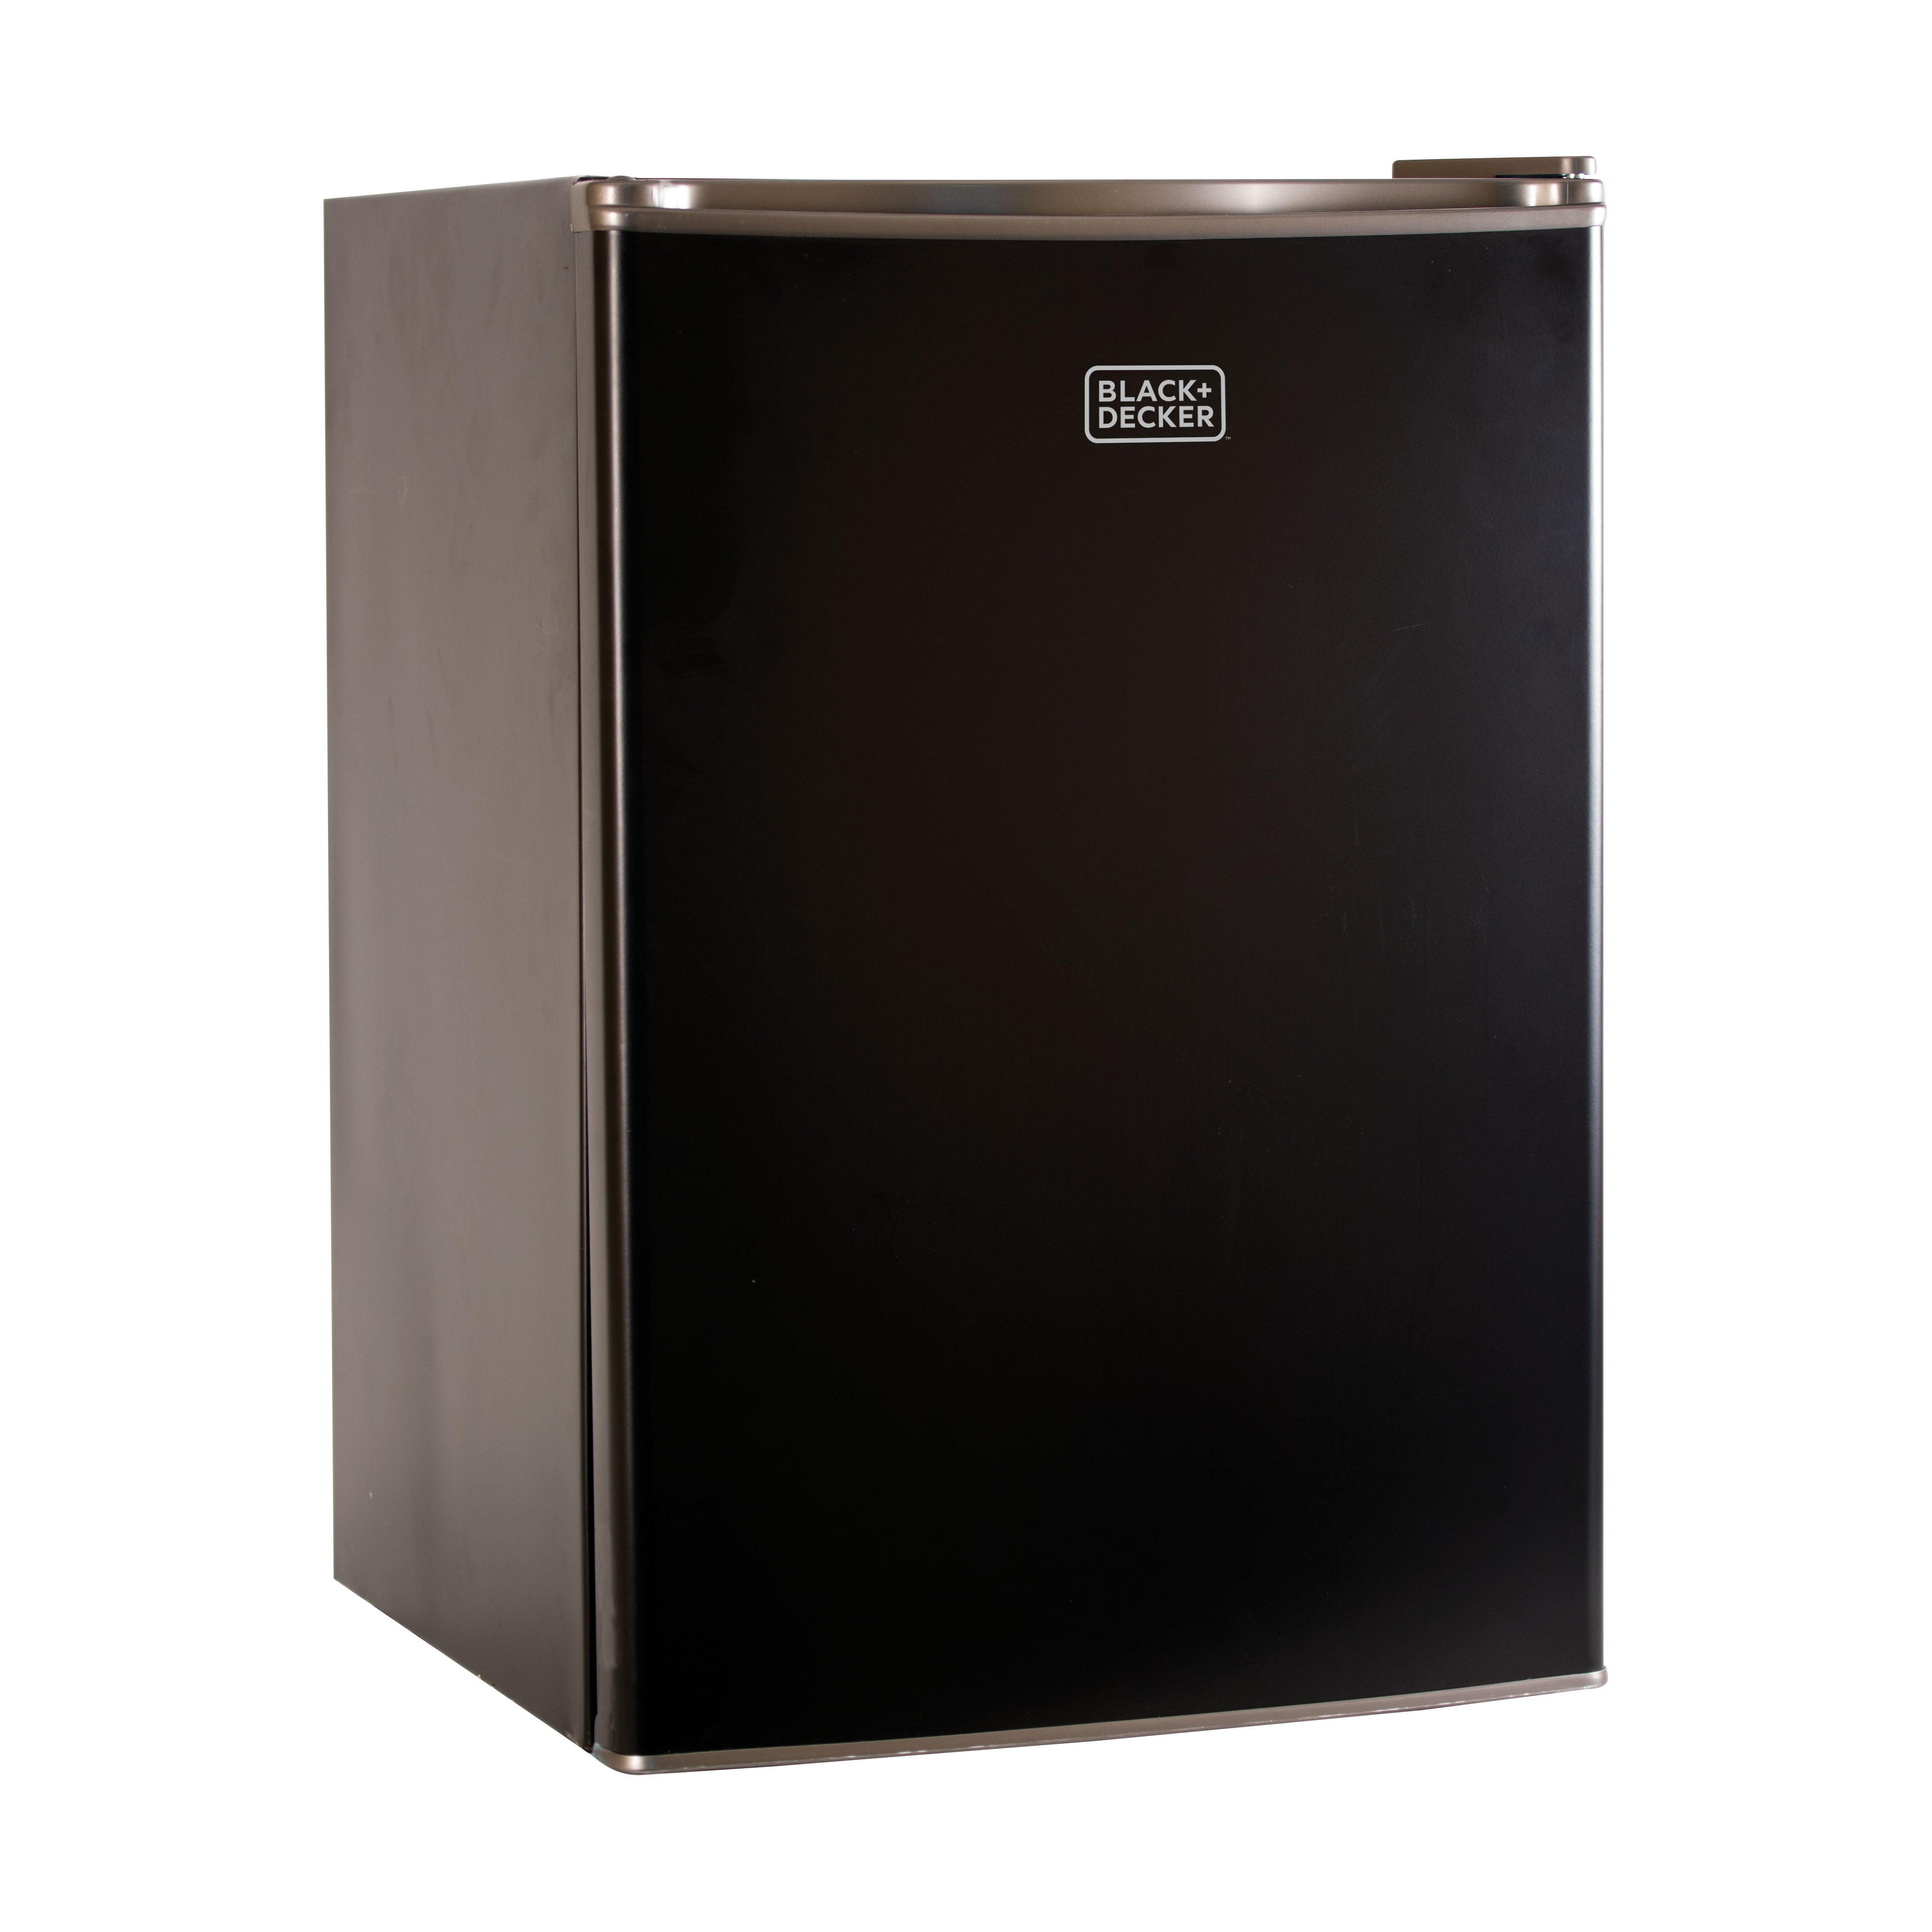 BLACK+DECKER Compact Refrigerator 2.5 Cu. Ft. with Door Storage, Black